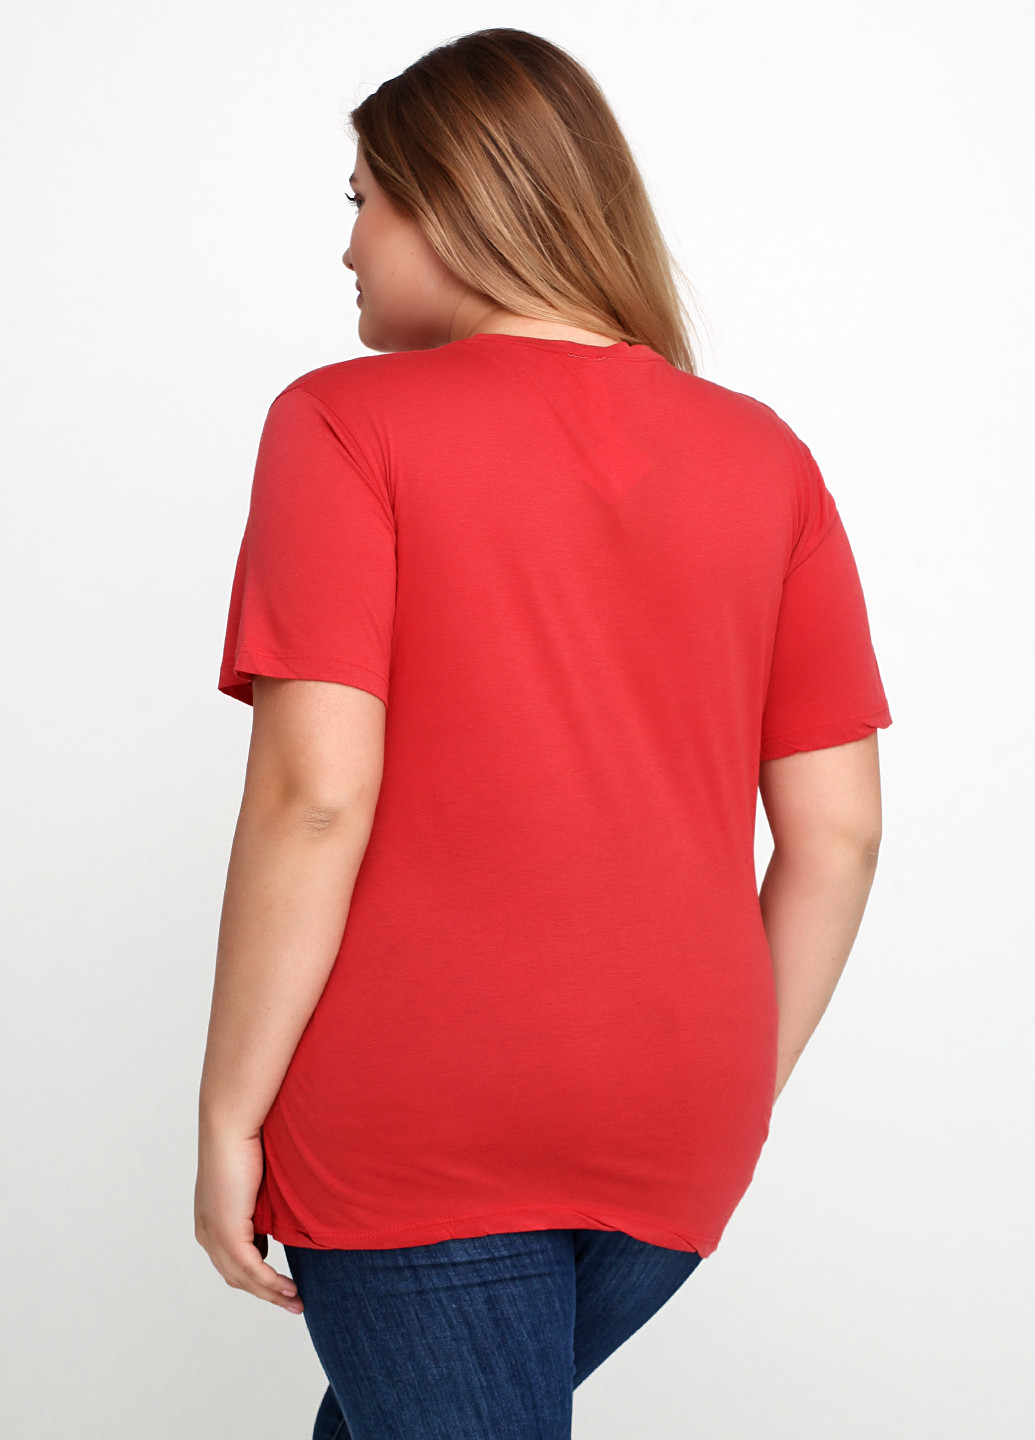 Светло-красная летняя футболка Bir Kim